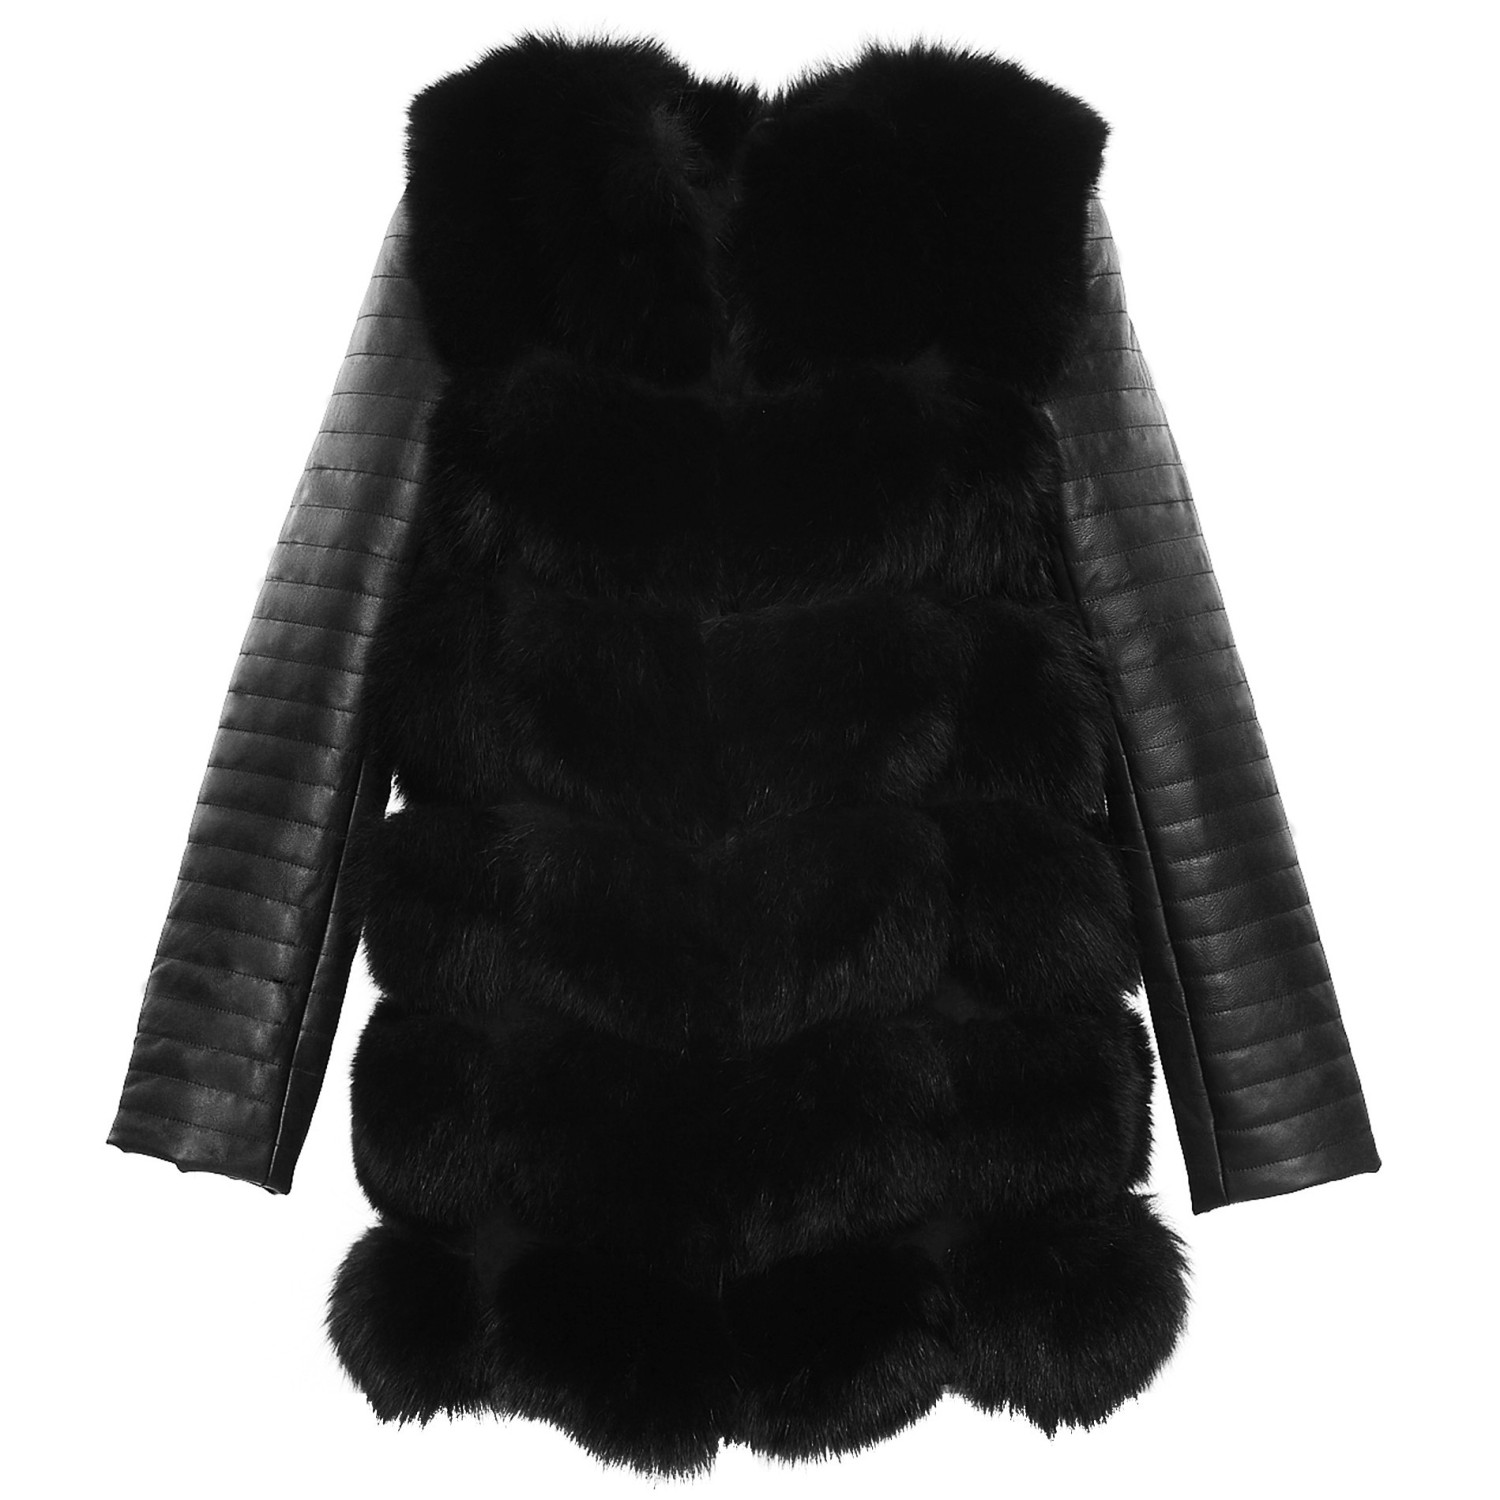 Black Fur Jacket with leather sleeves